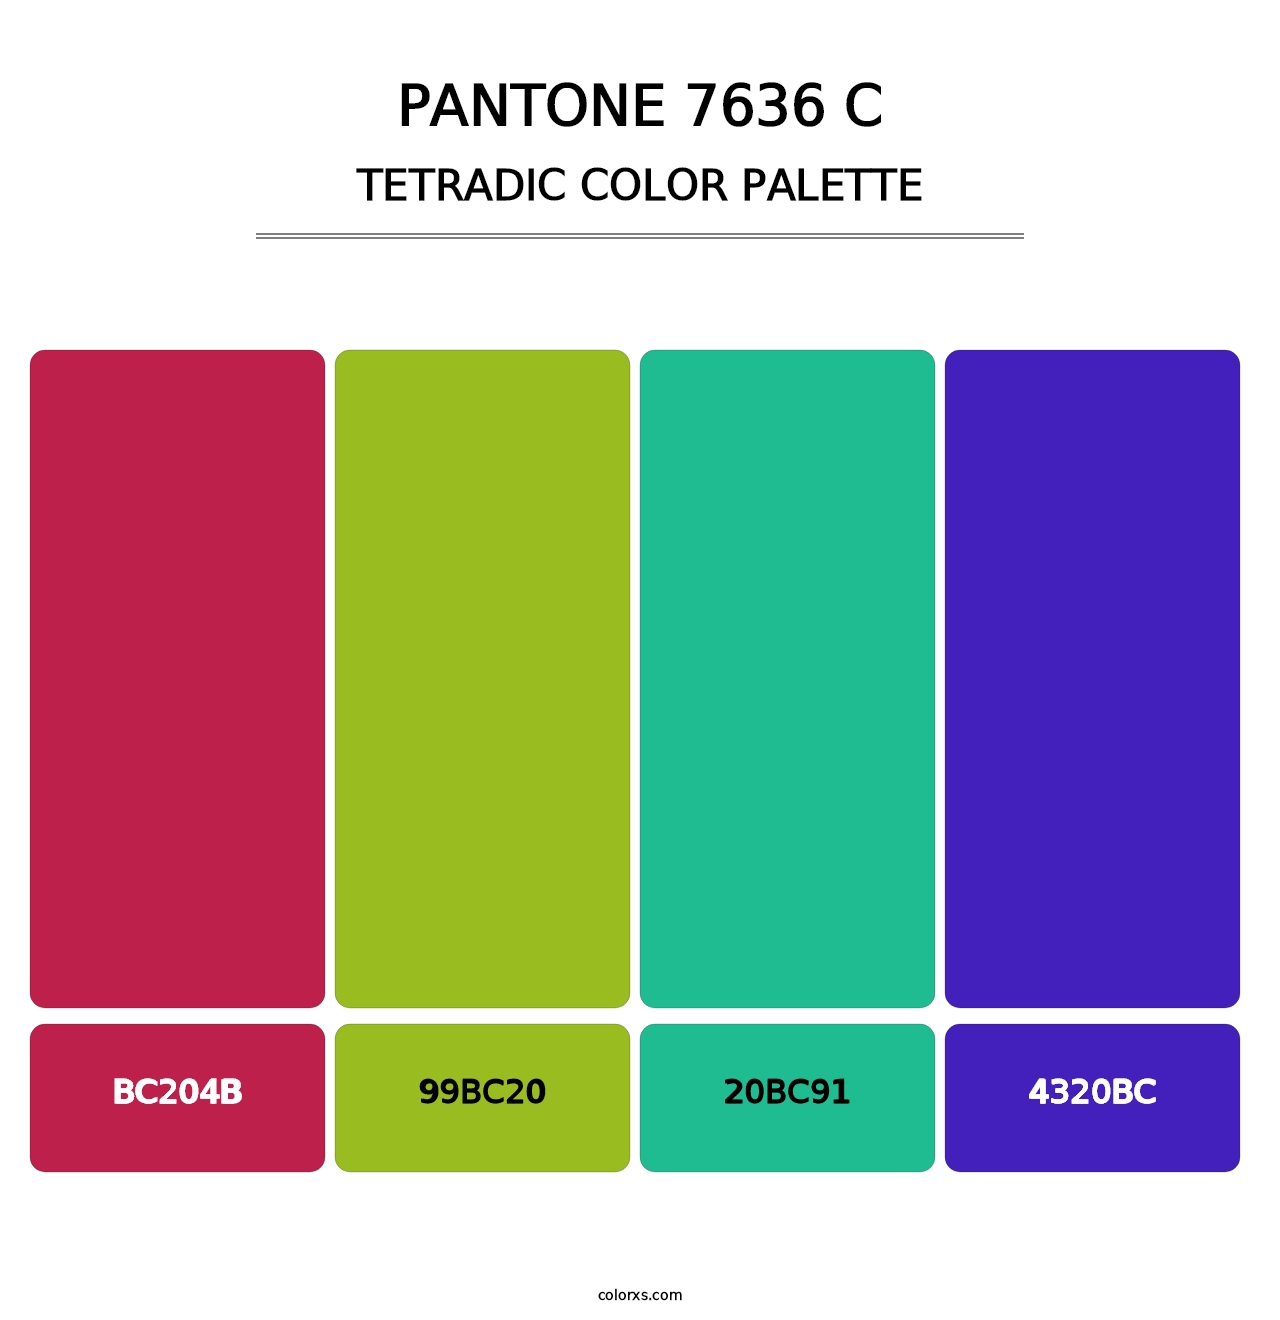 PANTONE 7636 C - Tetradic Color Palette